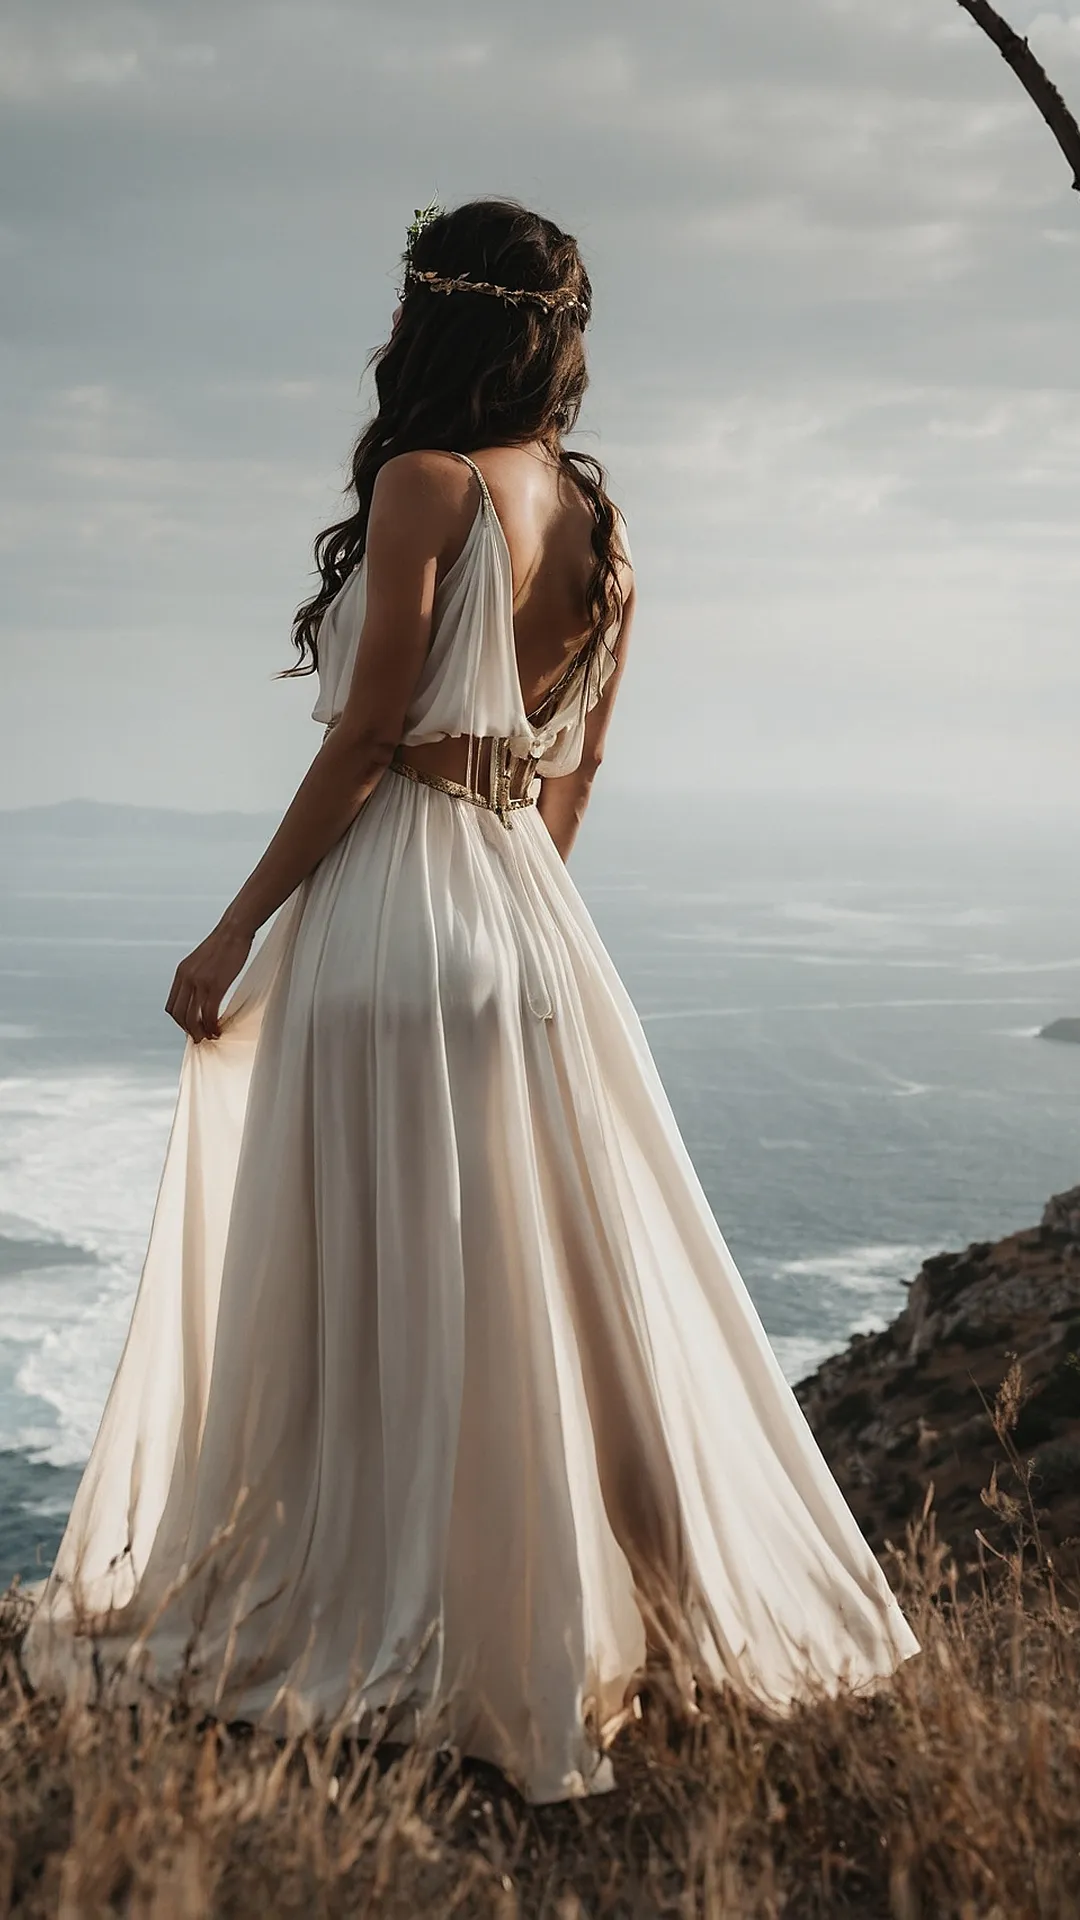 Majestic Grace: Dress to Impress Like a Goddess